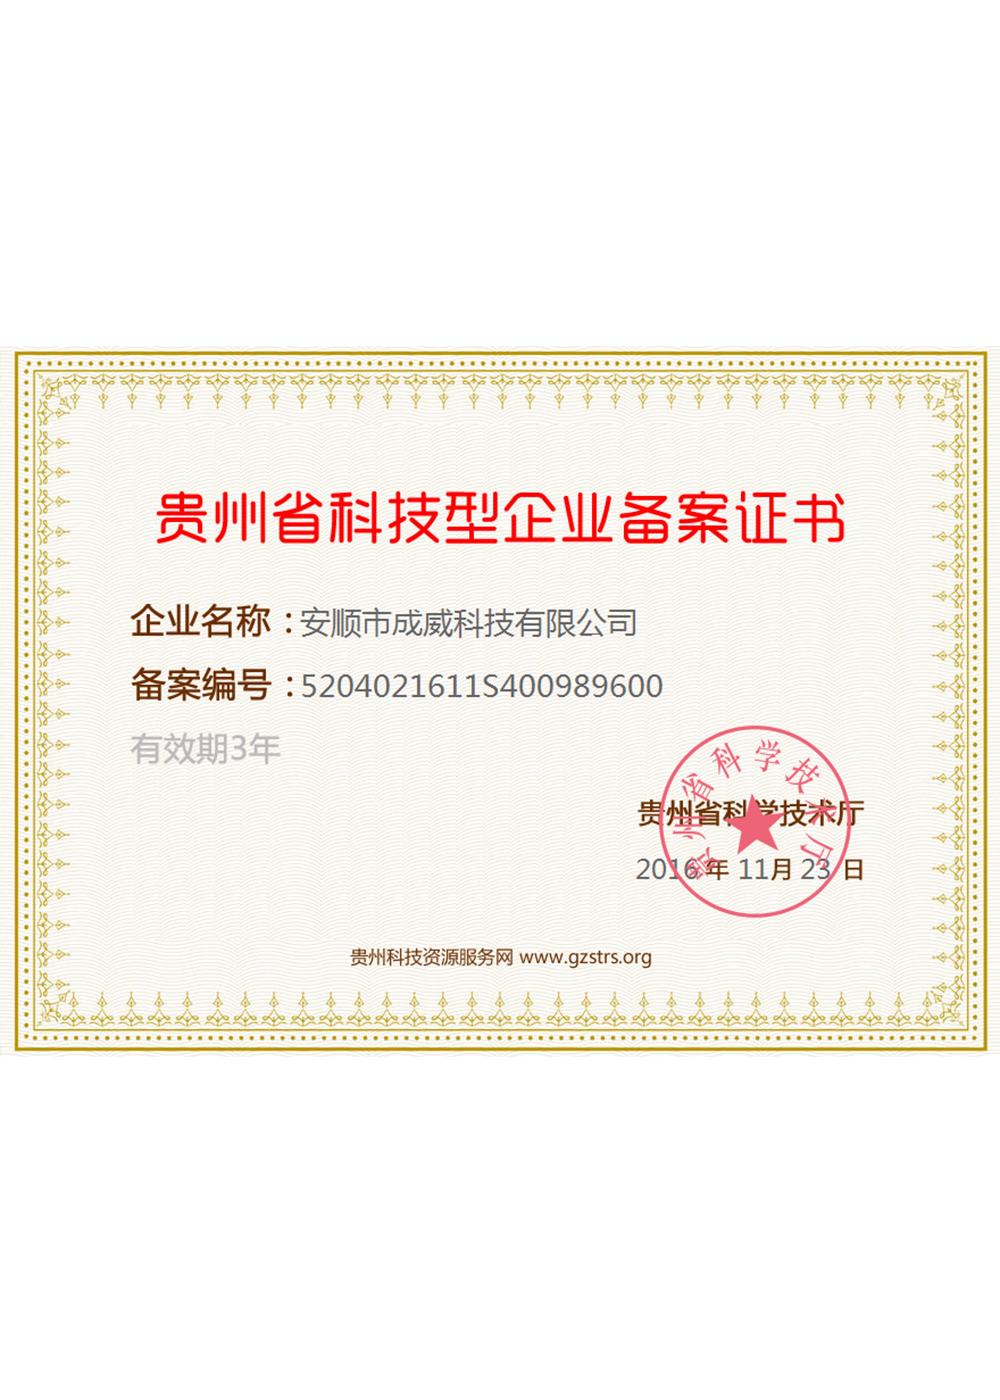 Guizhou Province Science and Technology Enterprise Filing Certificate